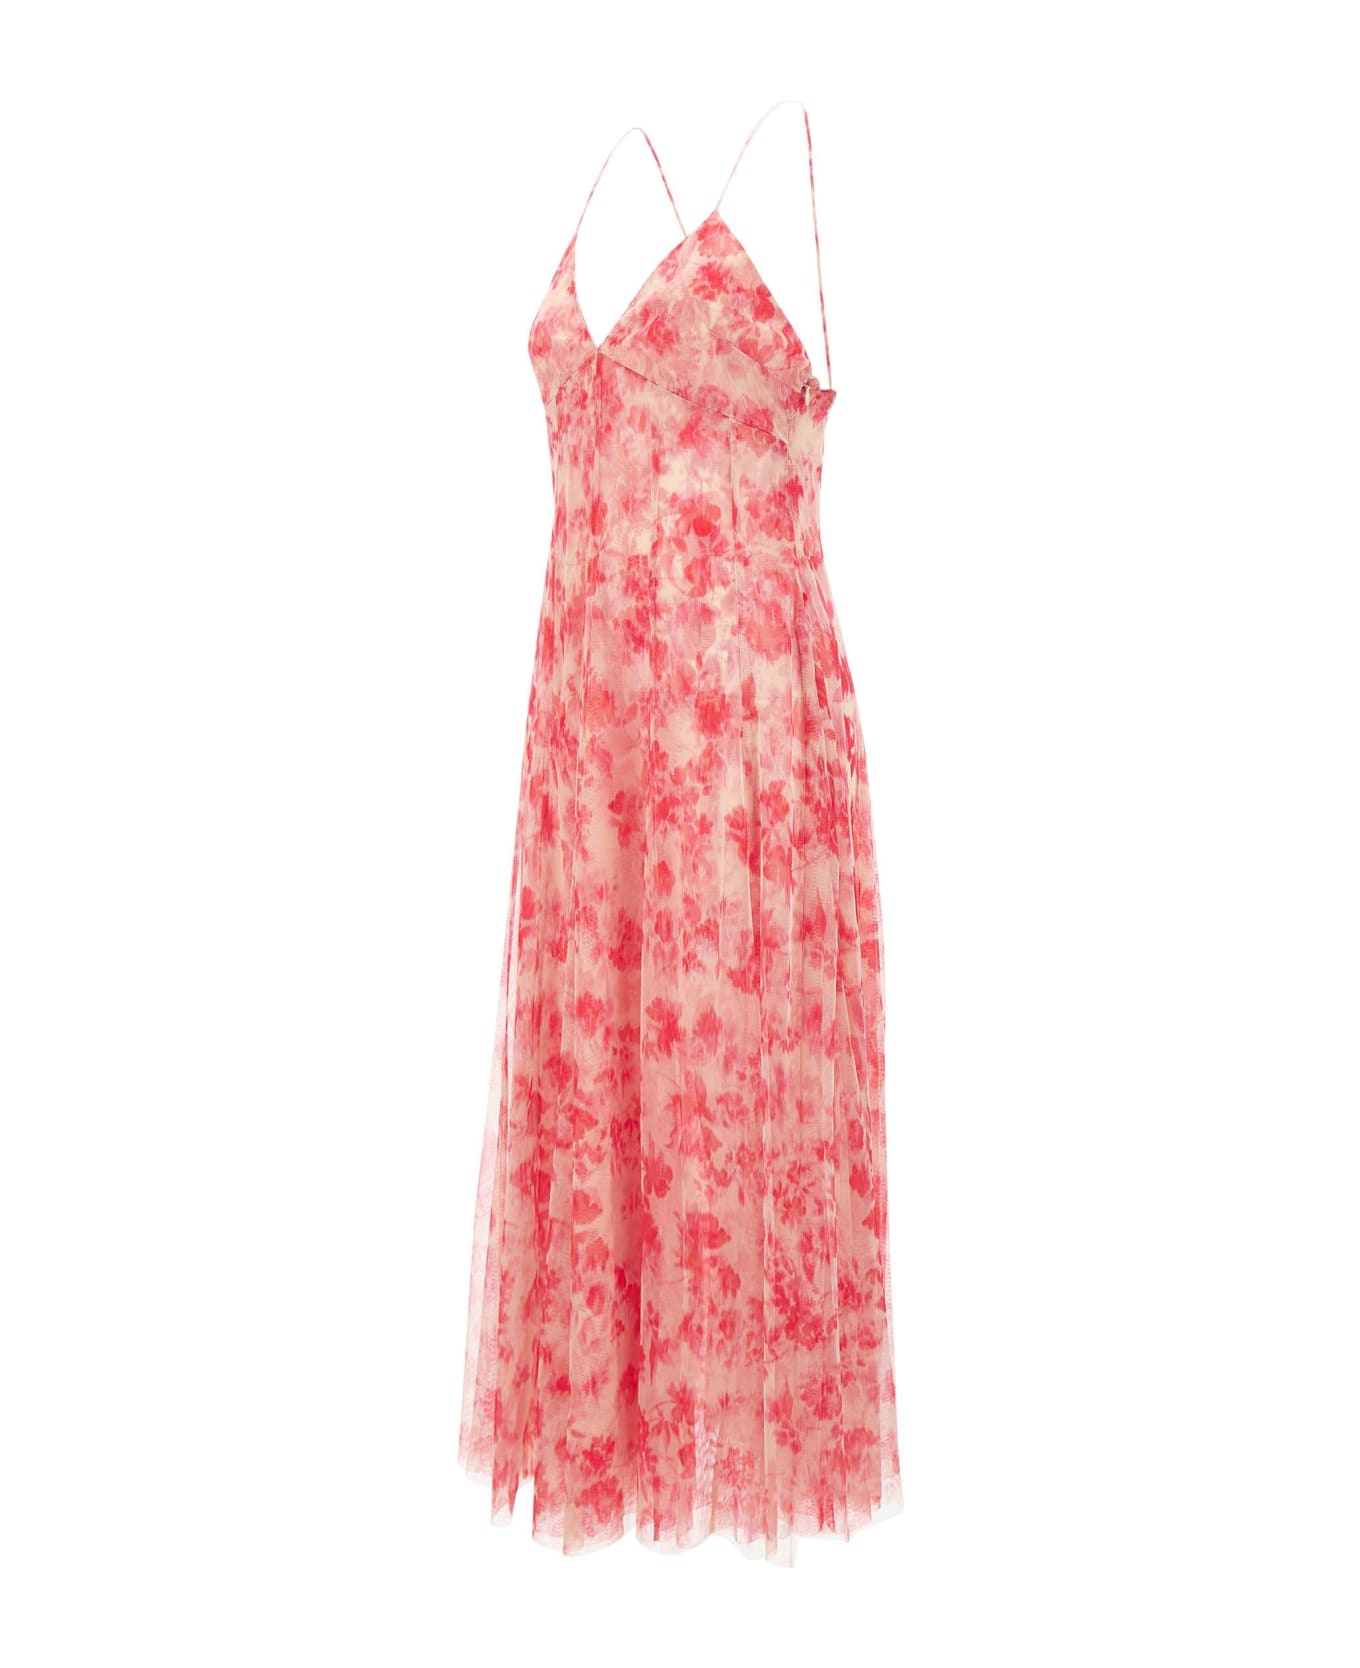 Philosophy di Lorenzo Serafini Tulle Dress - Pink/white